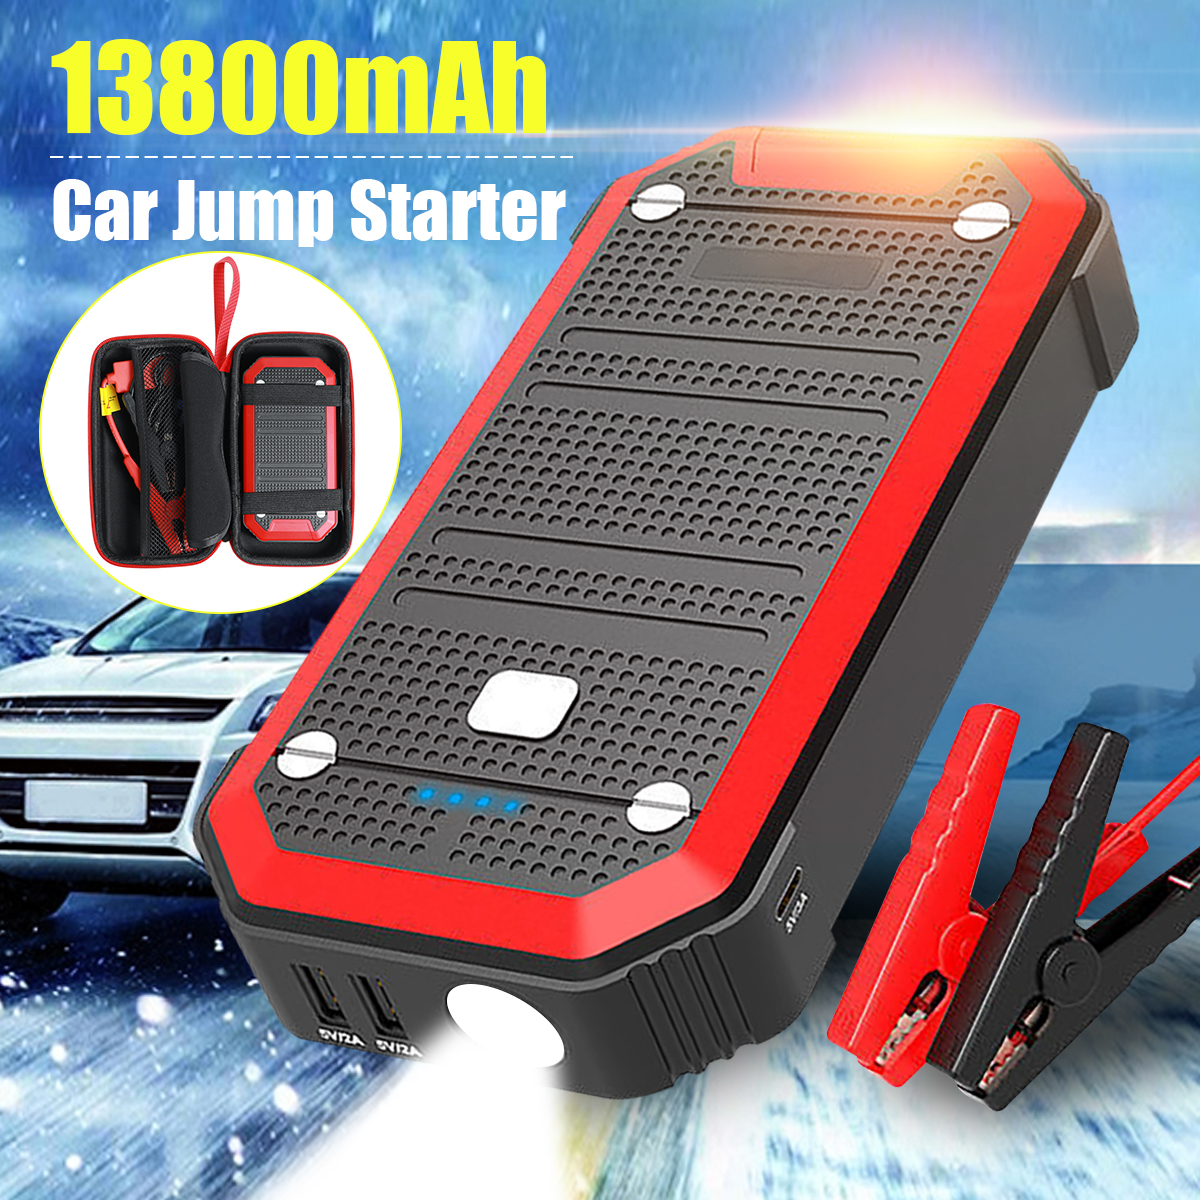 Portable-Car-Jump-Starter-13800mAh-12V-Emergency-Starting-Device-Power-Bank-1829877-1